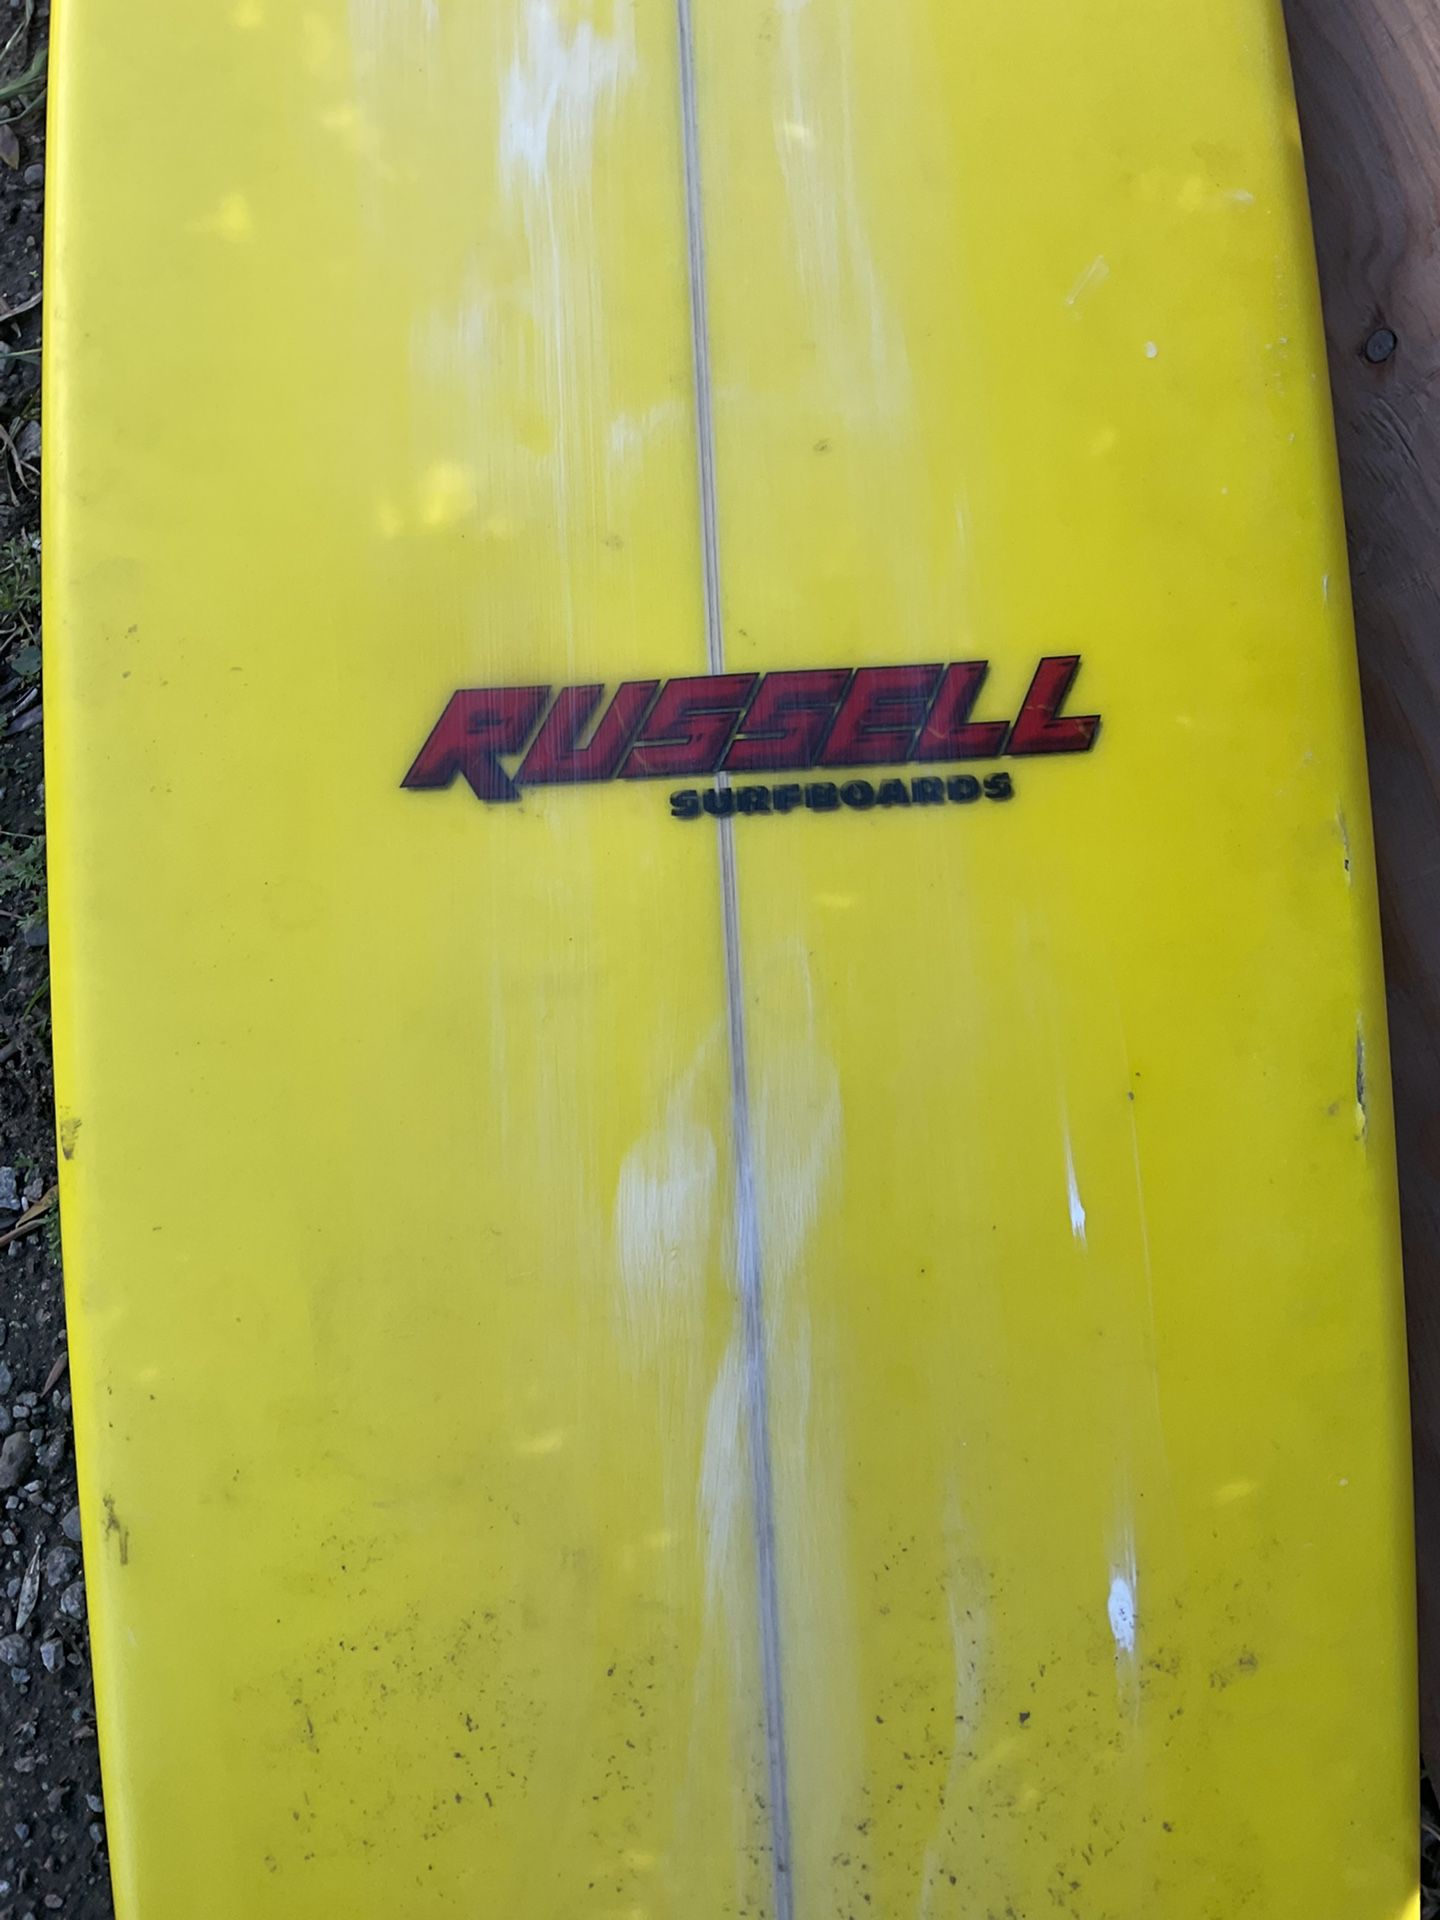 Russell Surfboard